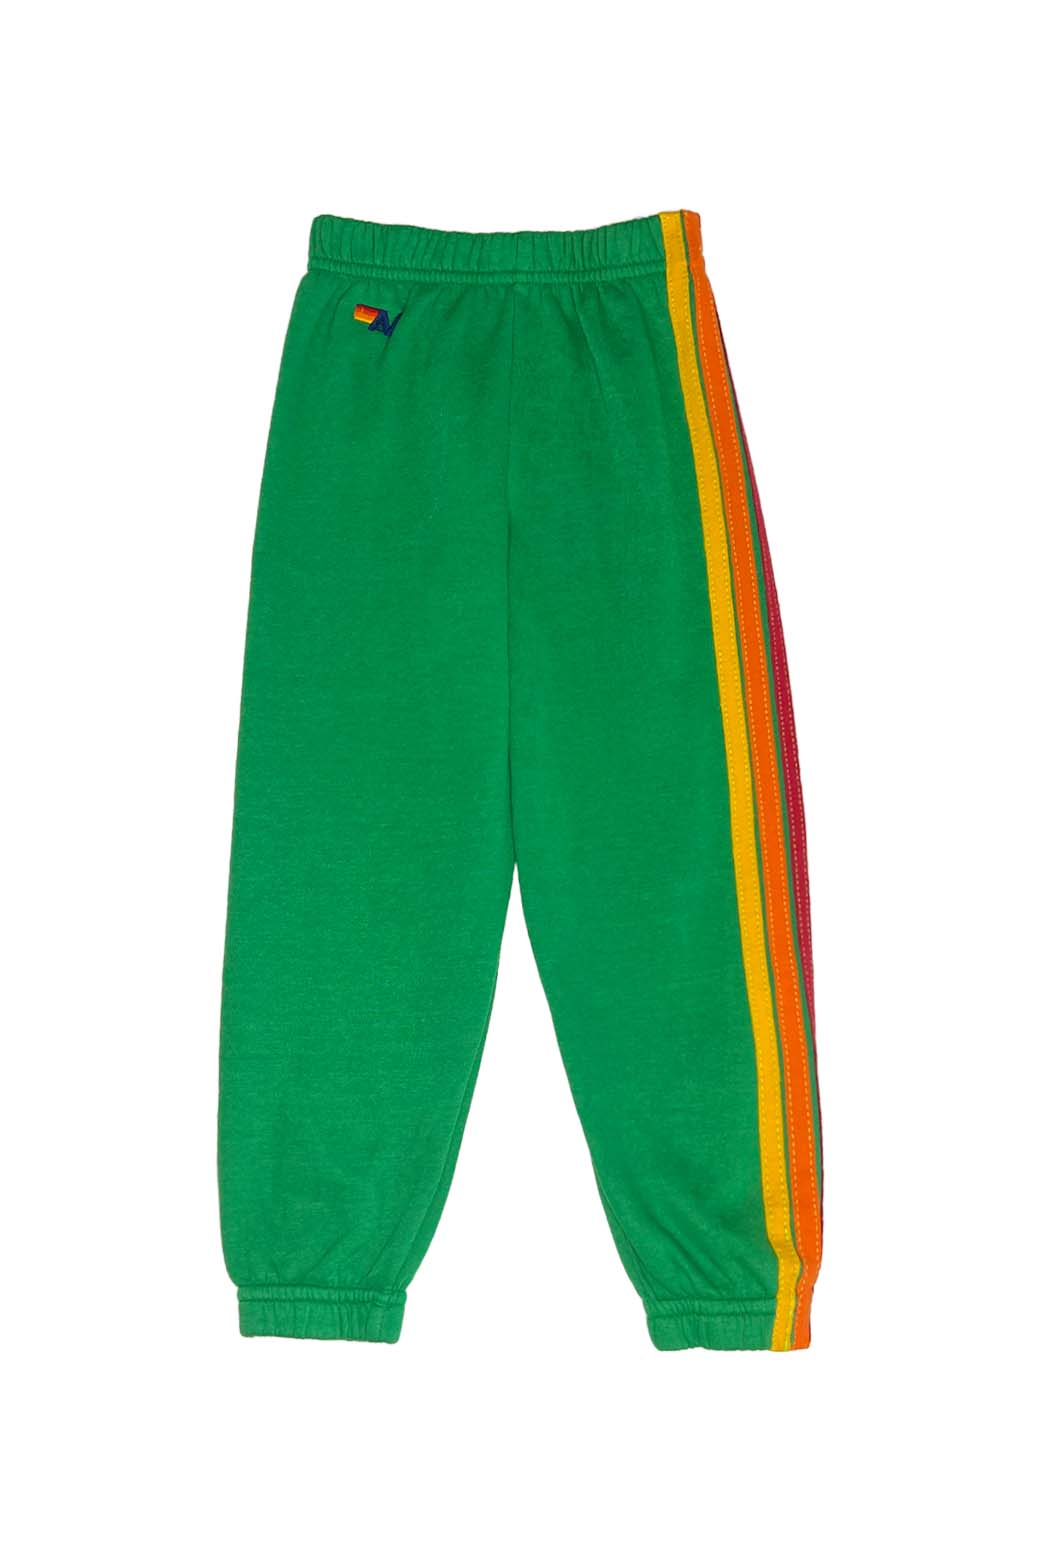 KID'S 5 STRIPE SWEATPANTS - KELLY GREEN Kid's Sweatpants Aviator Nation 